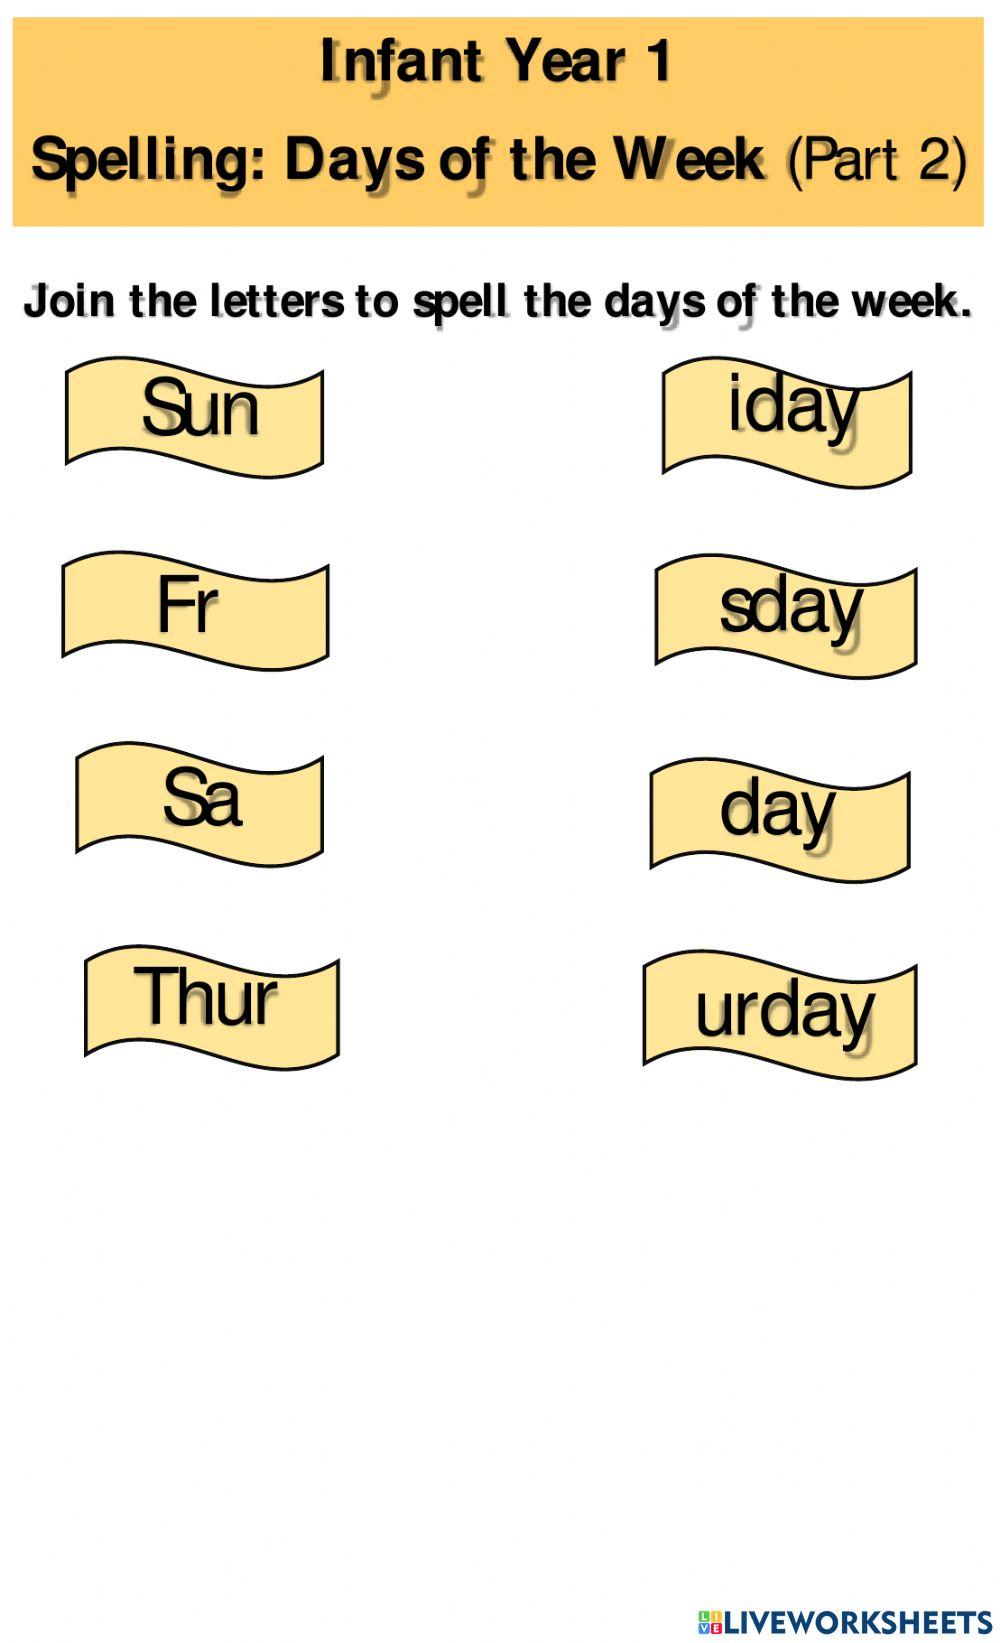 Days of the week spelling